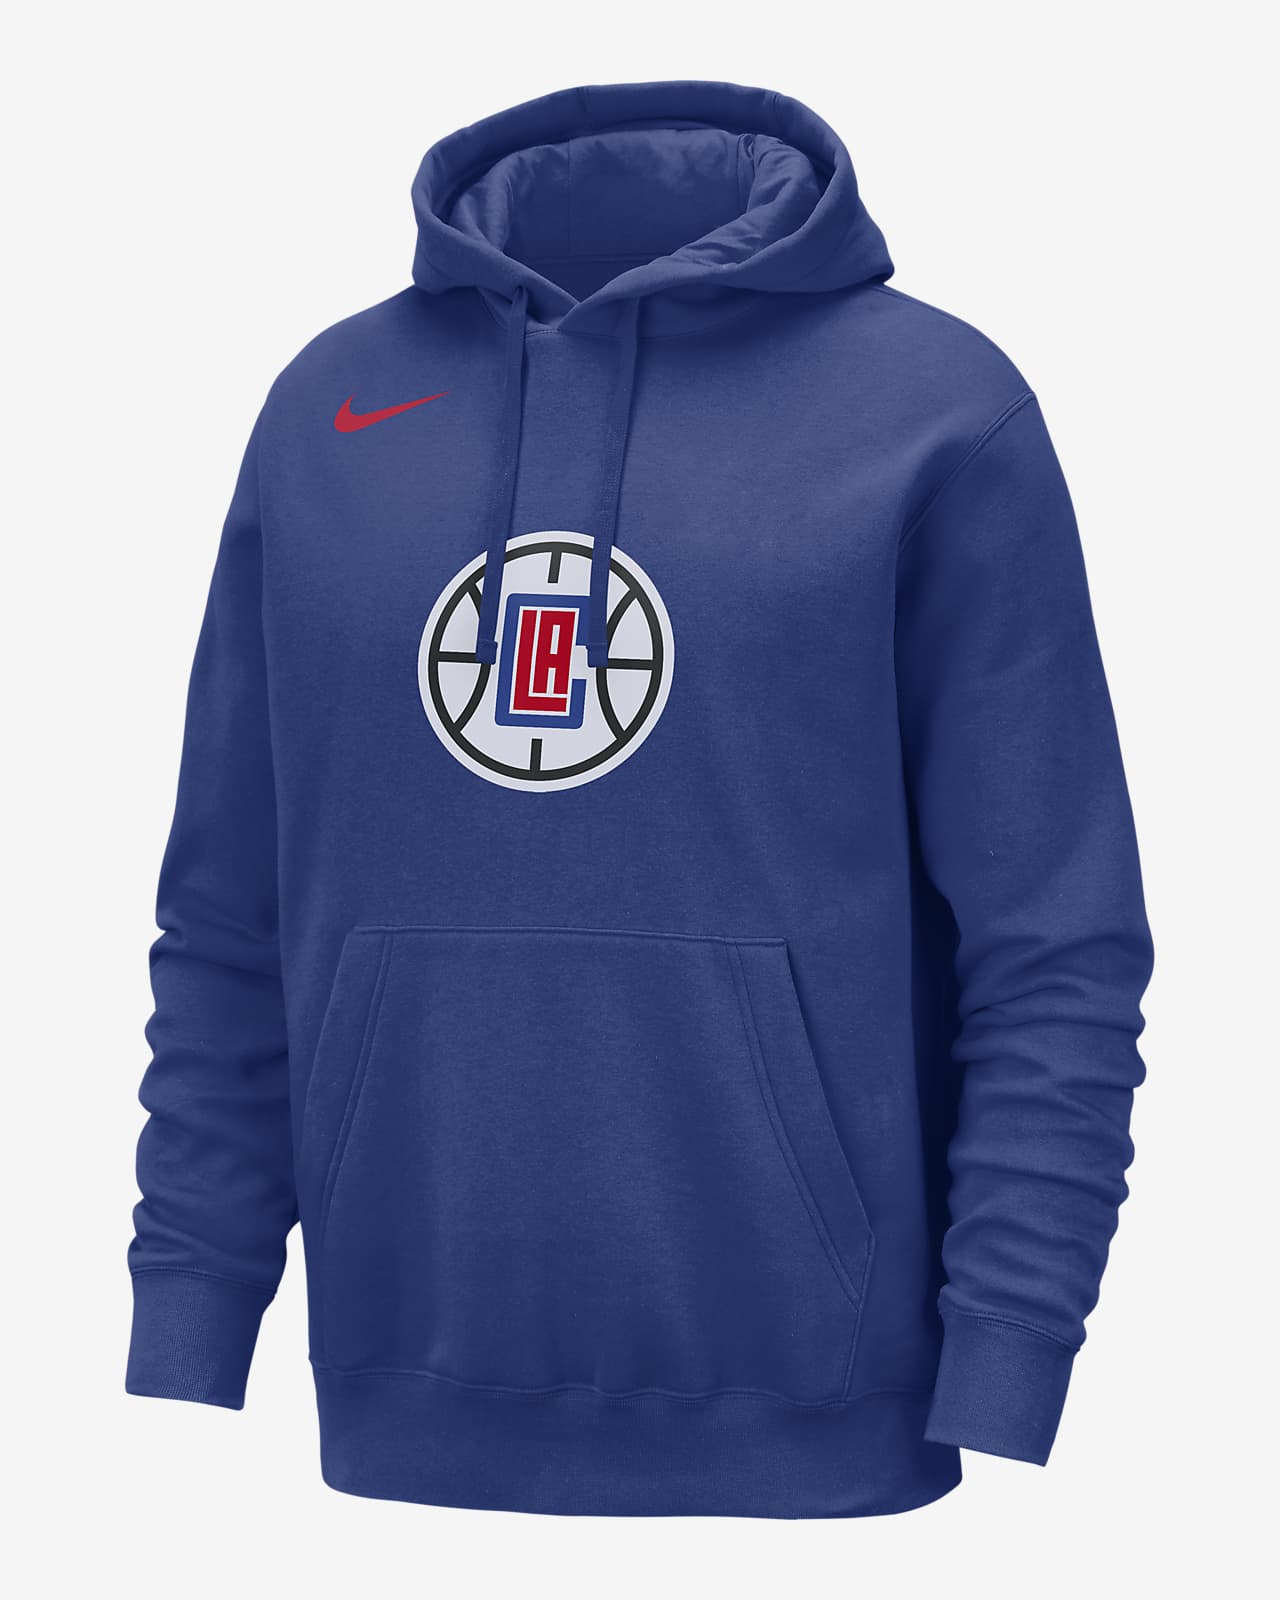 LA Clippers Men's Nike NBA Long-Sleeve T-Shirt